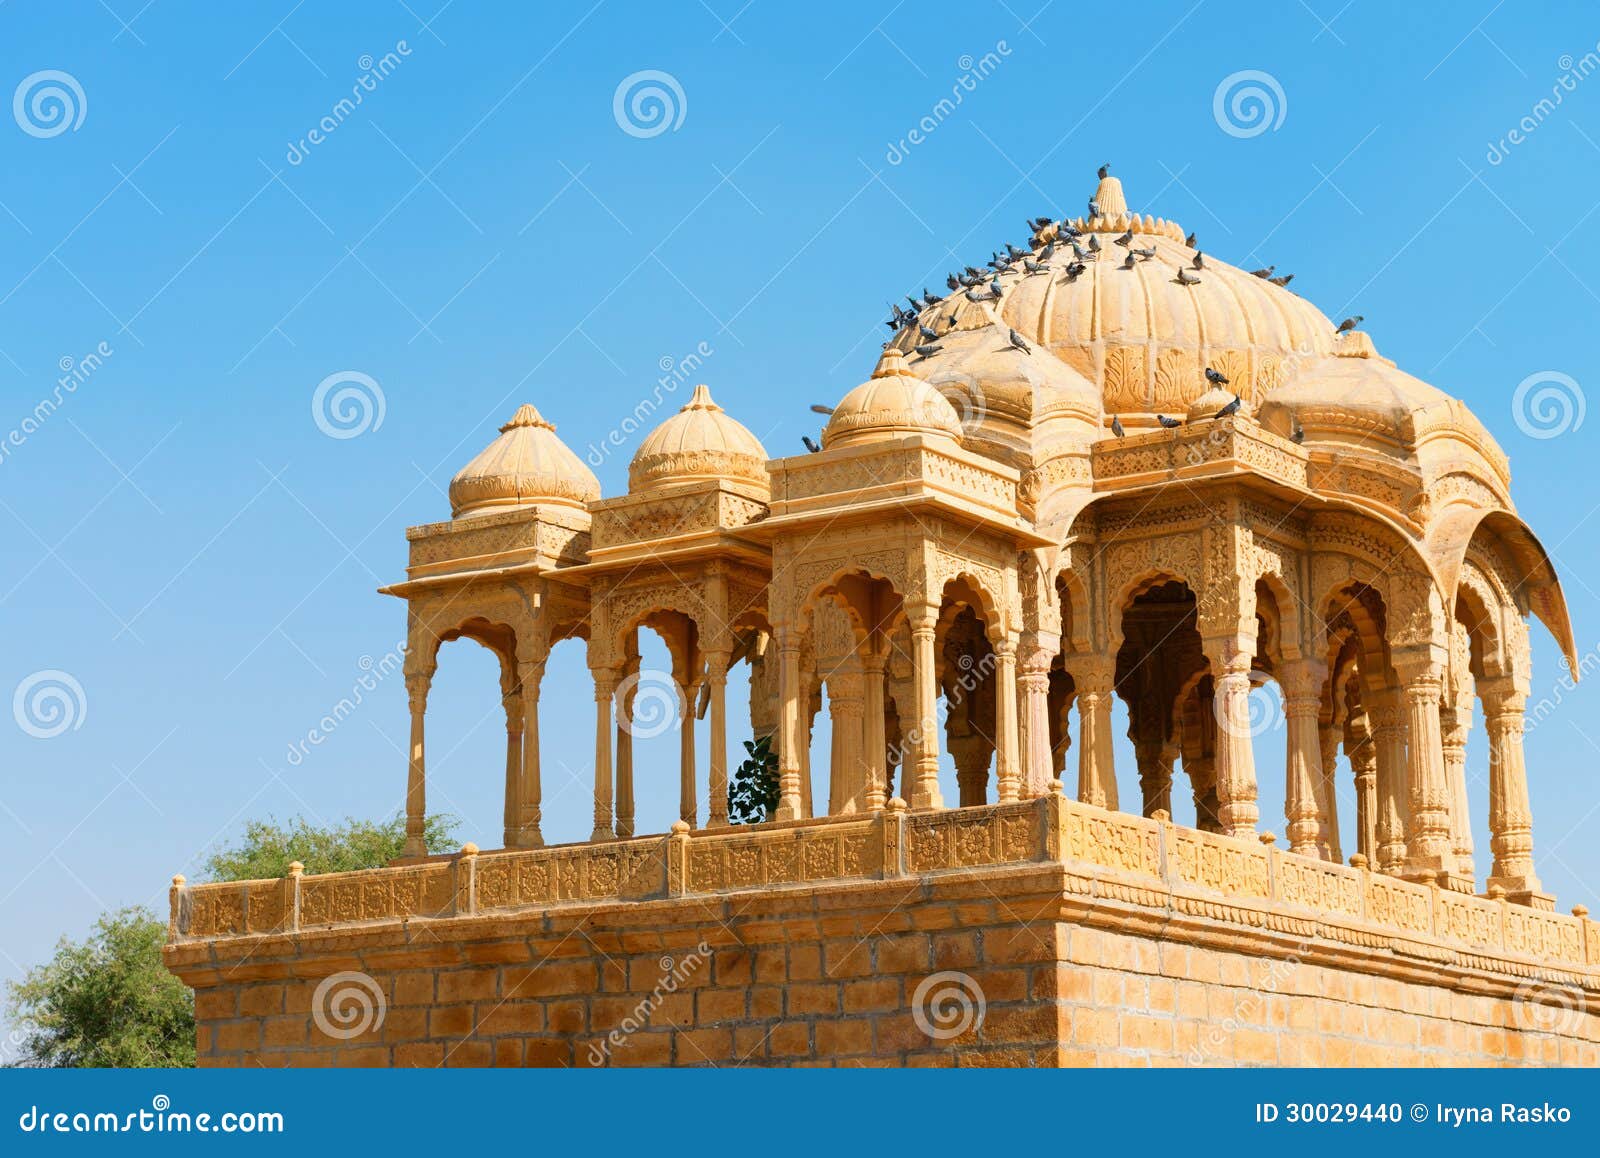 royal cenotaphs, bada bagh, india